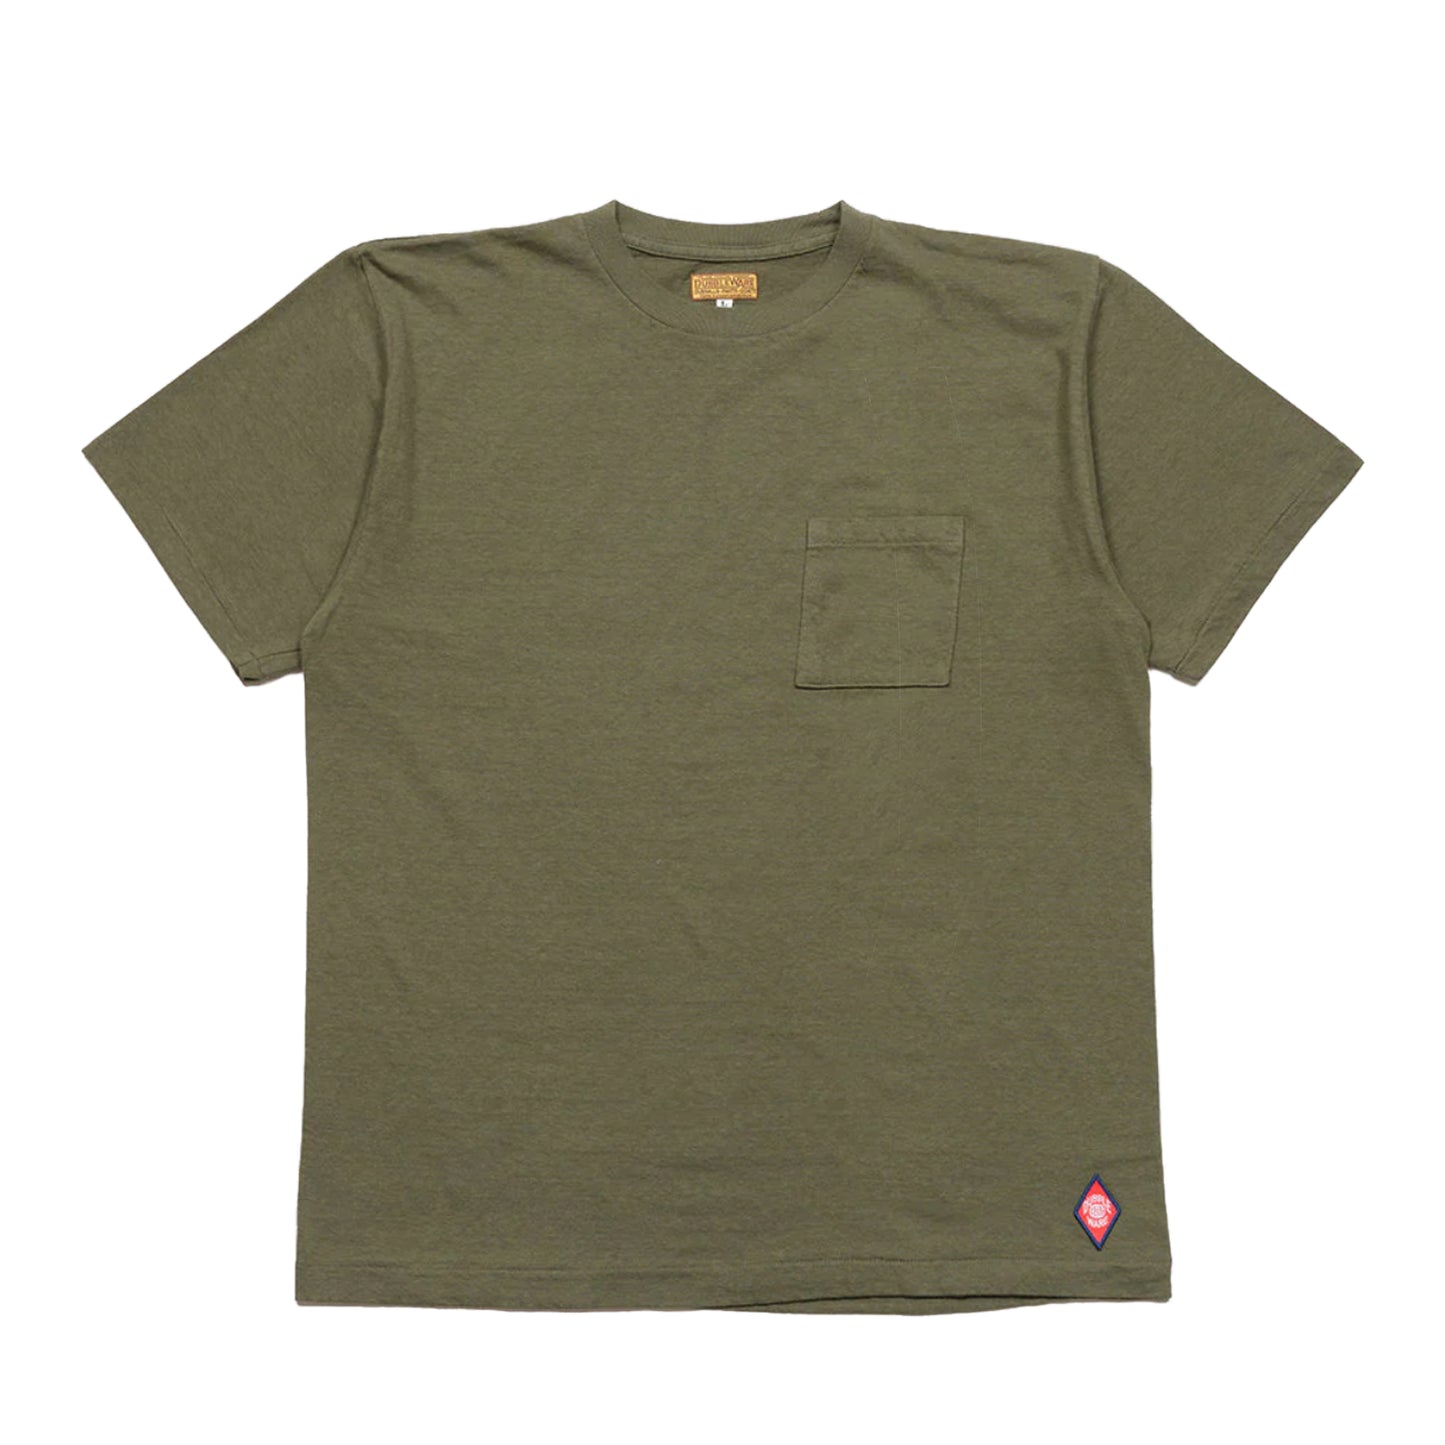 Dubbleware Crew Neck Pocket T-Shirt - Khaki Green - SALE 35% OFF